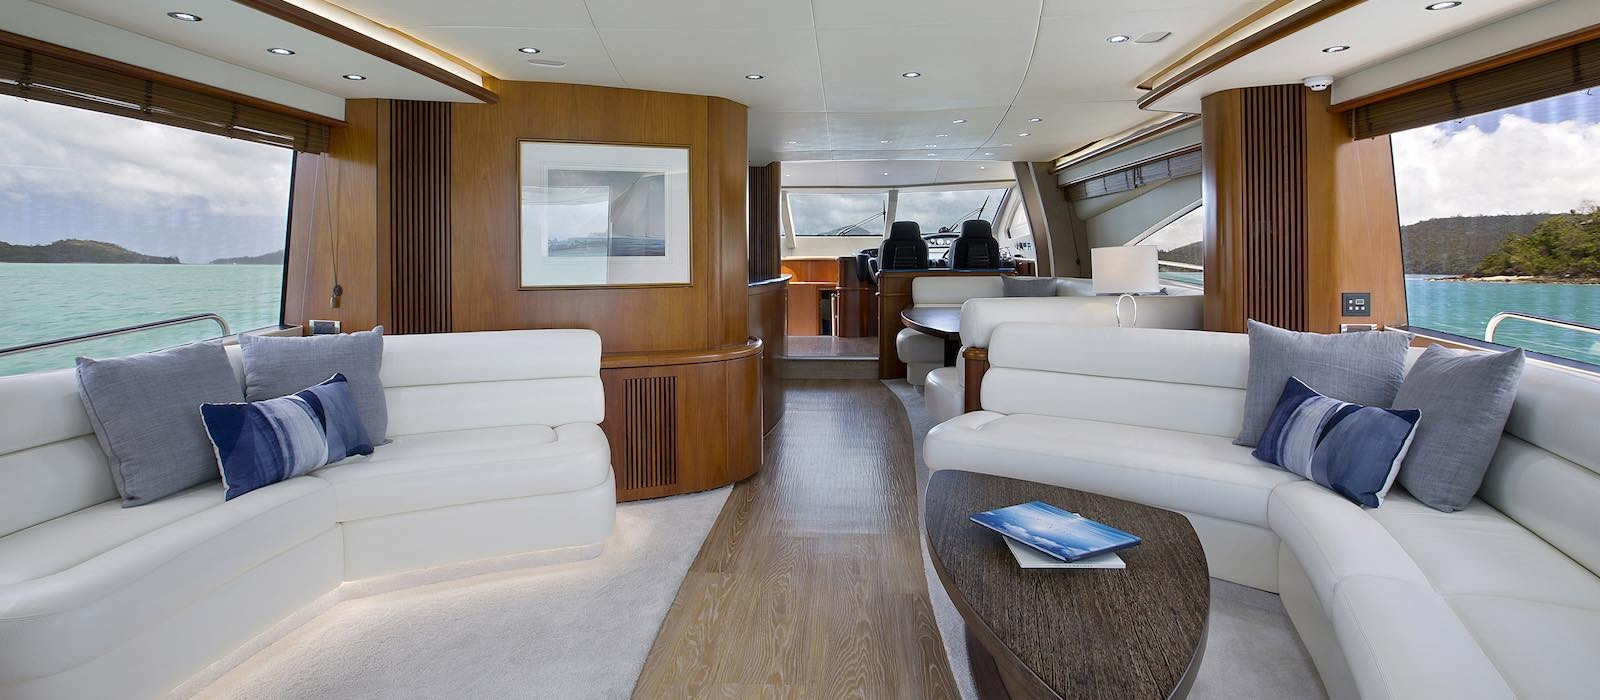 Main lounge on Alani luxury boat hire